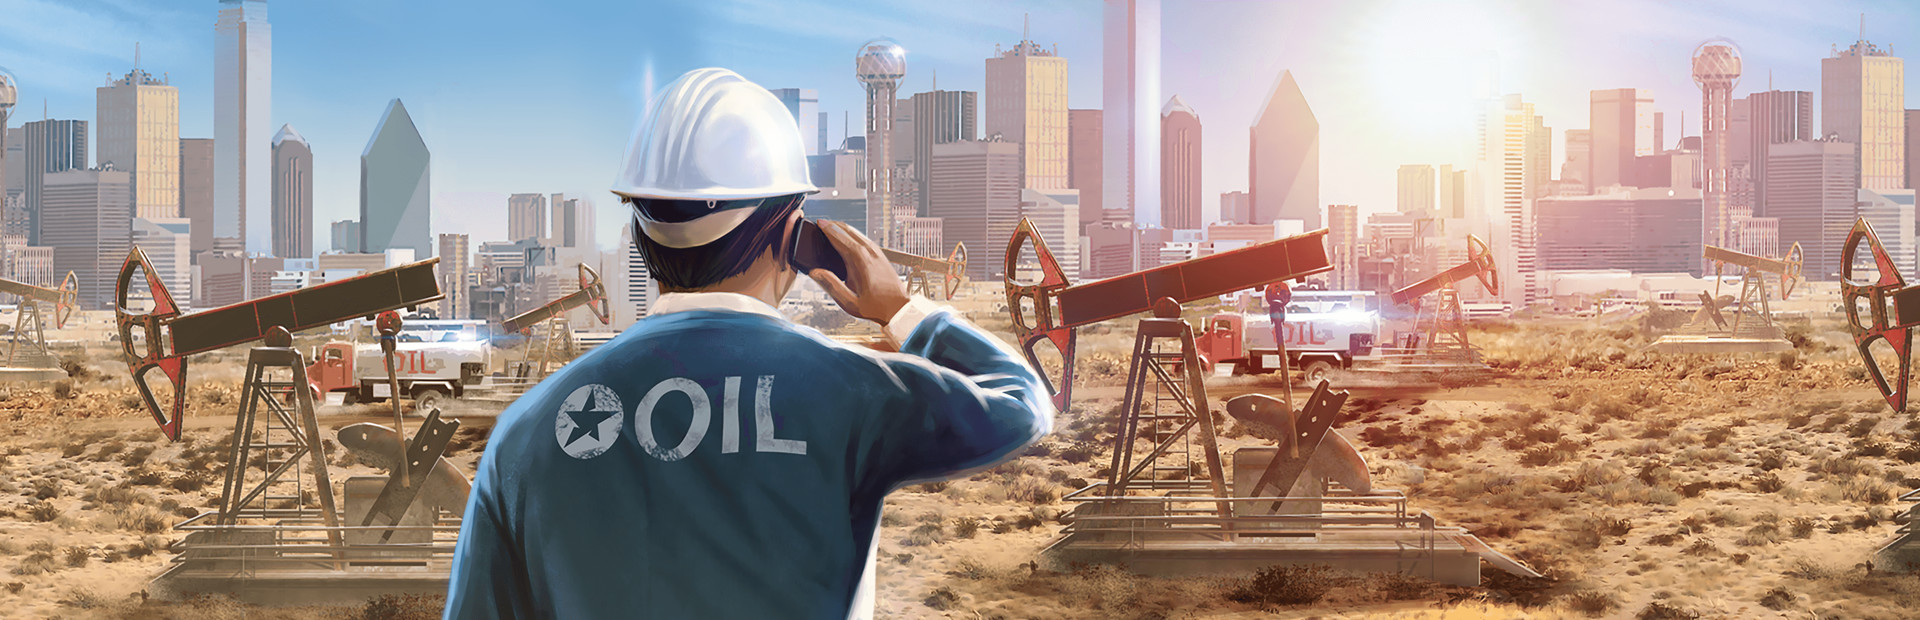 Oil Enterprise cover image